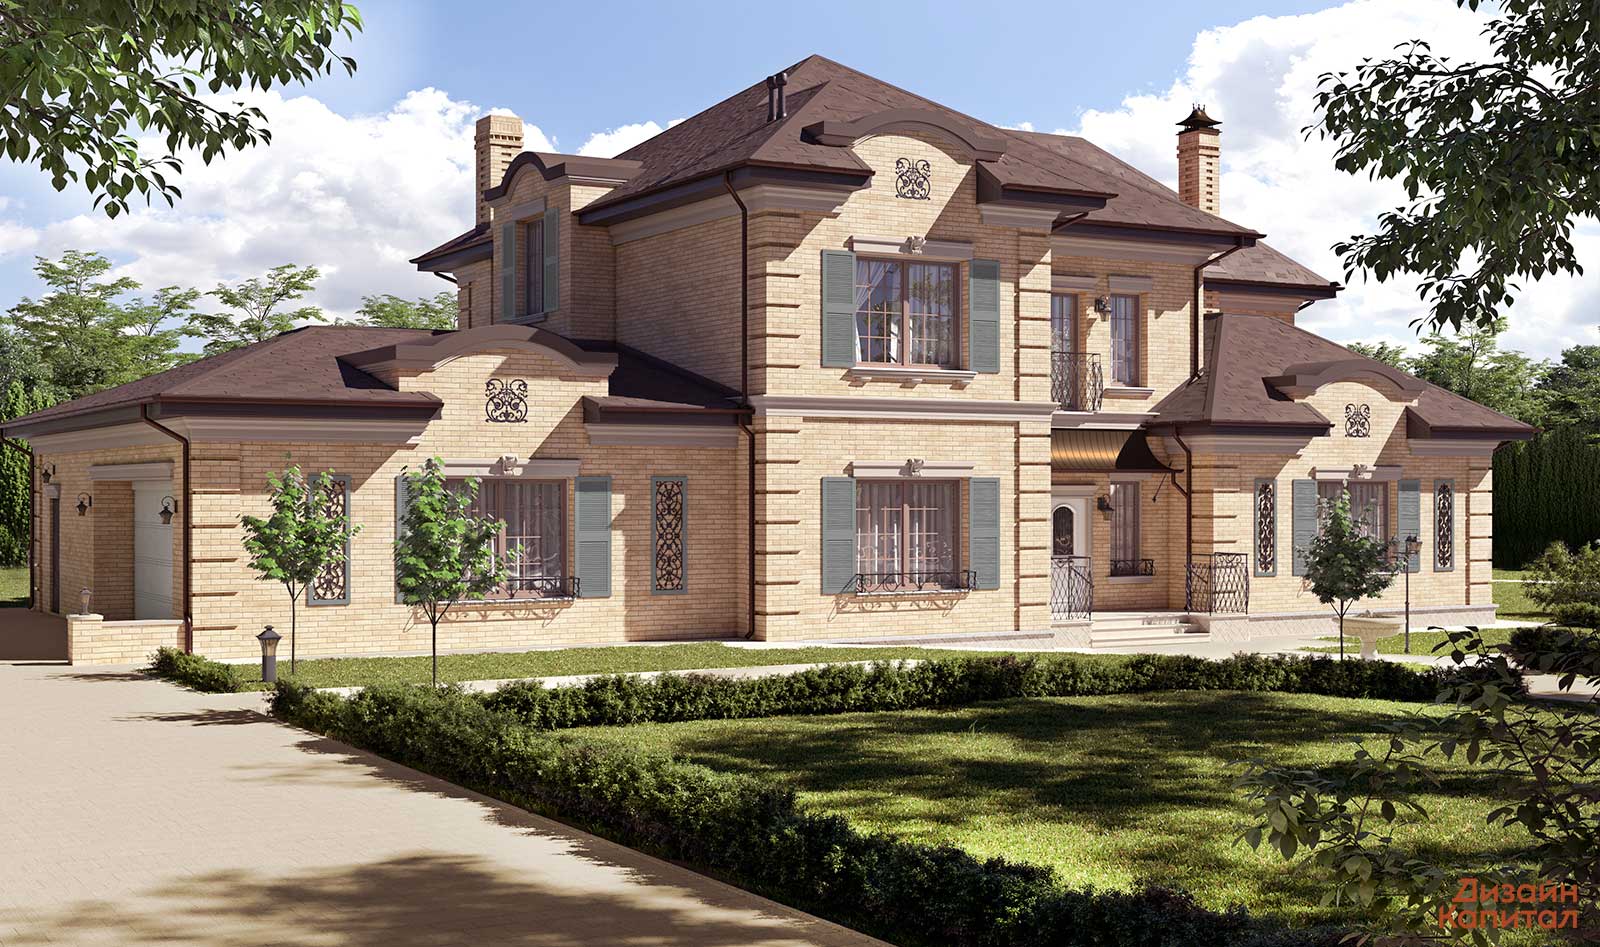 English mansion facade design. Beige brick. Copper visor over the entrance.